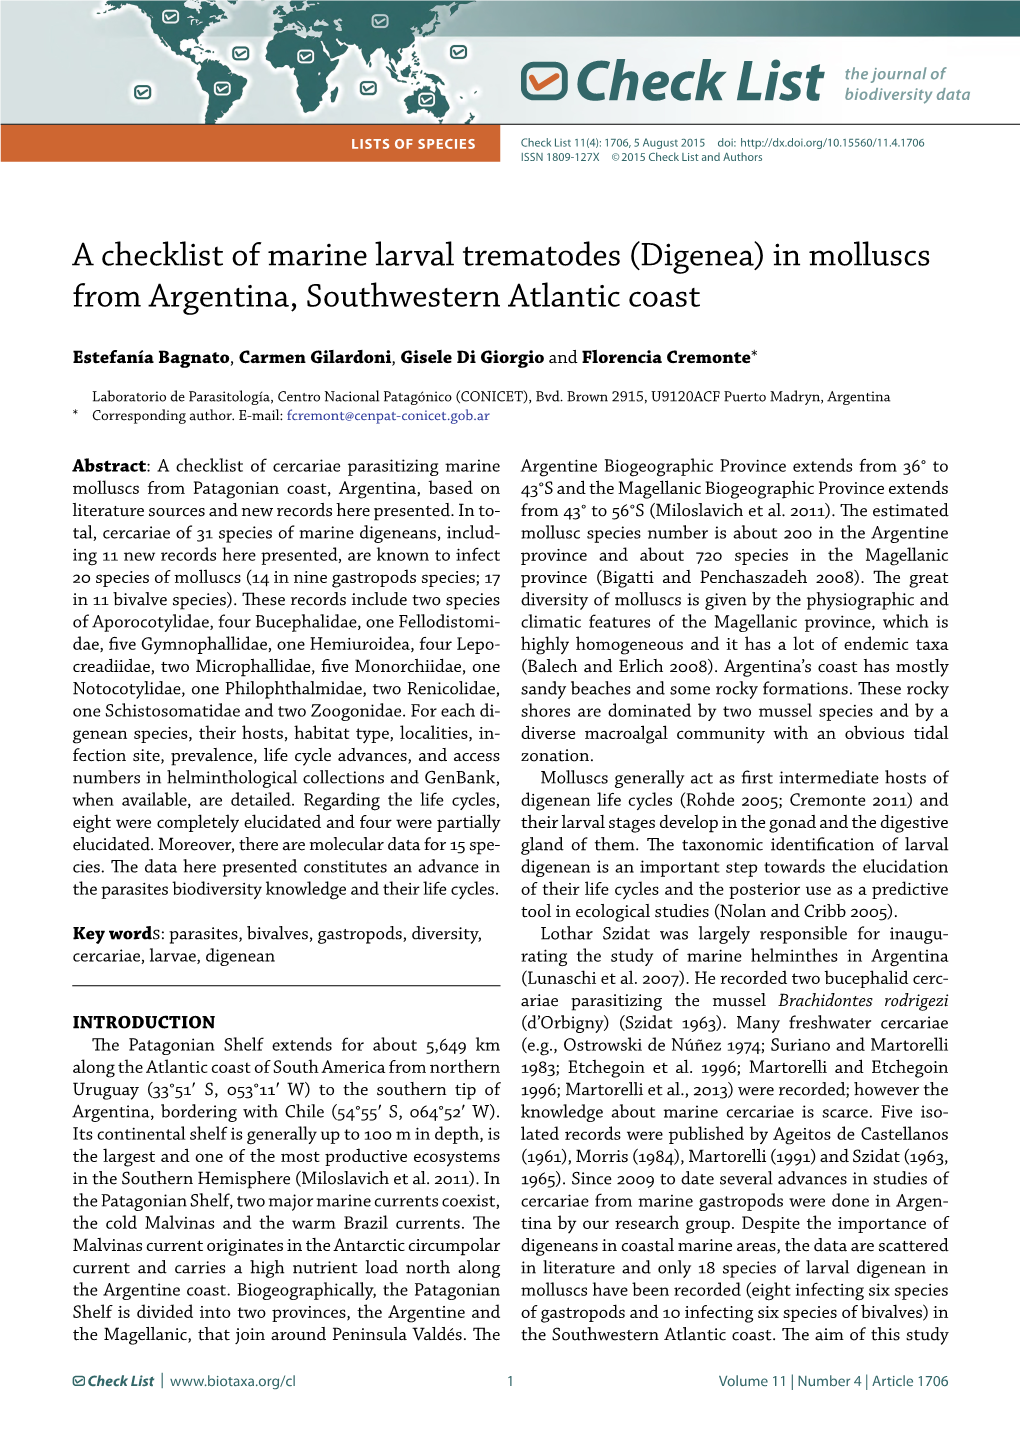 A Checklist of Marine Larval Trematodes (Digenea) in Molluscs from Argentina, Southwestern Atlantic Coast